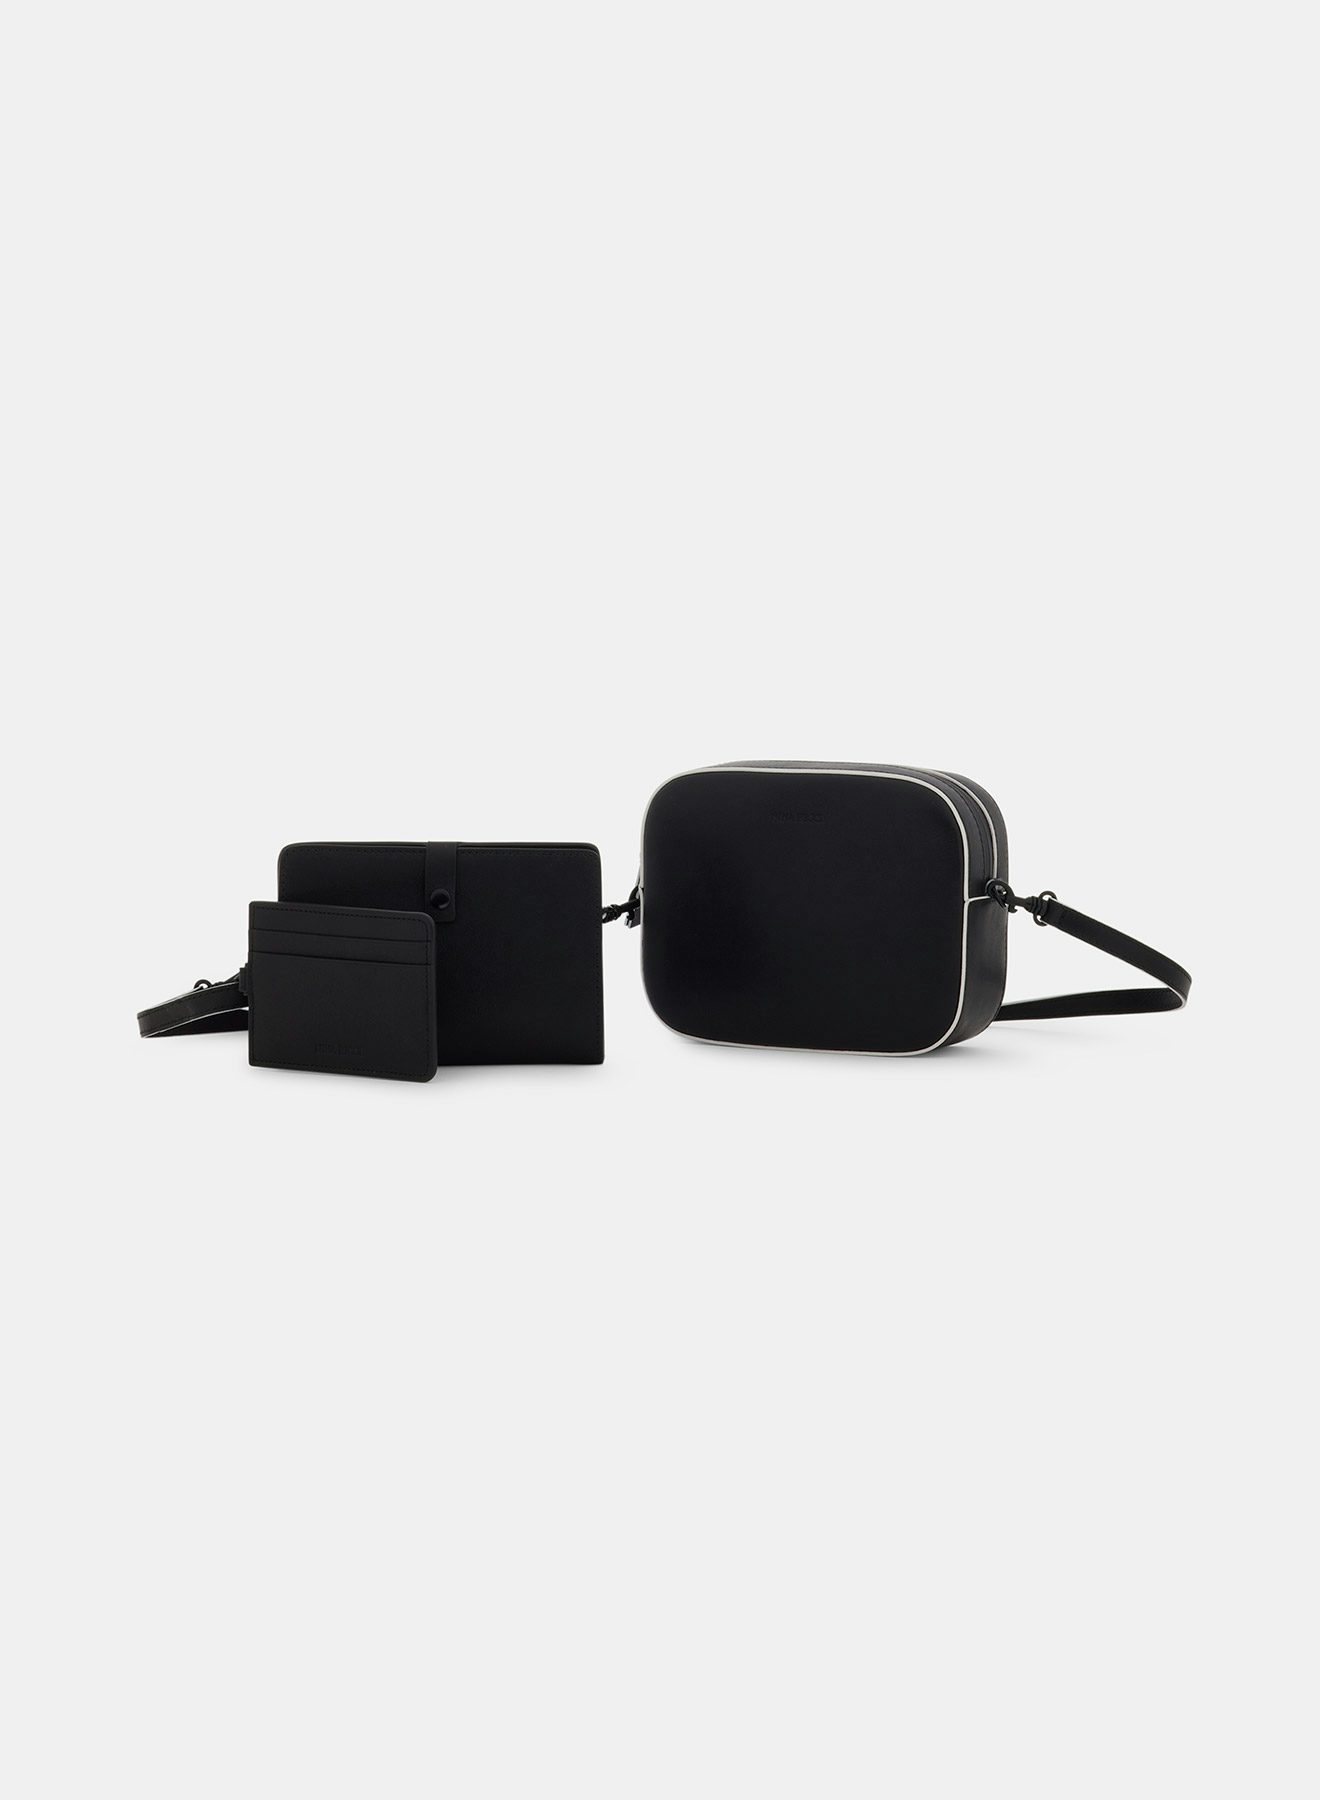 Bolso cámara de piel negra con bandolera - Nina Ricci